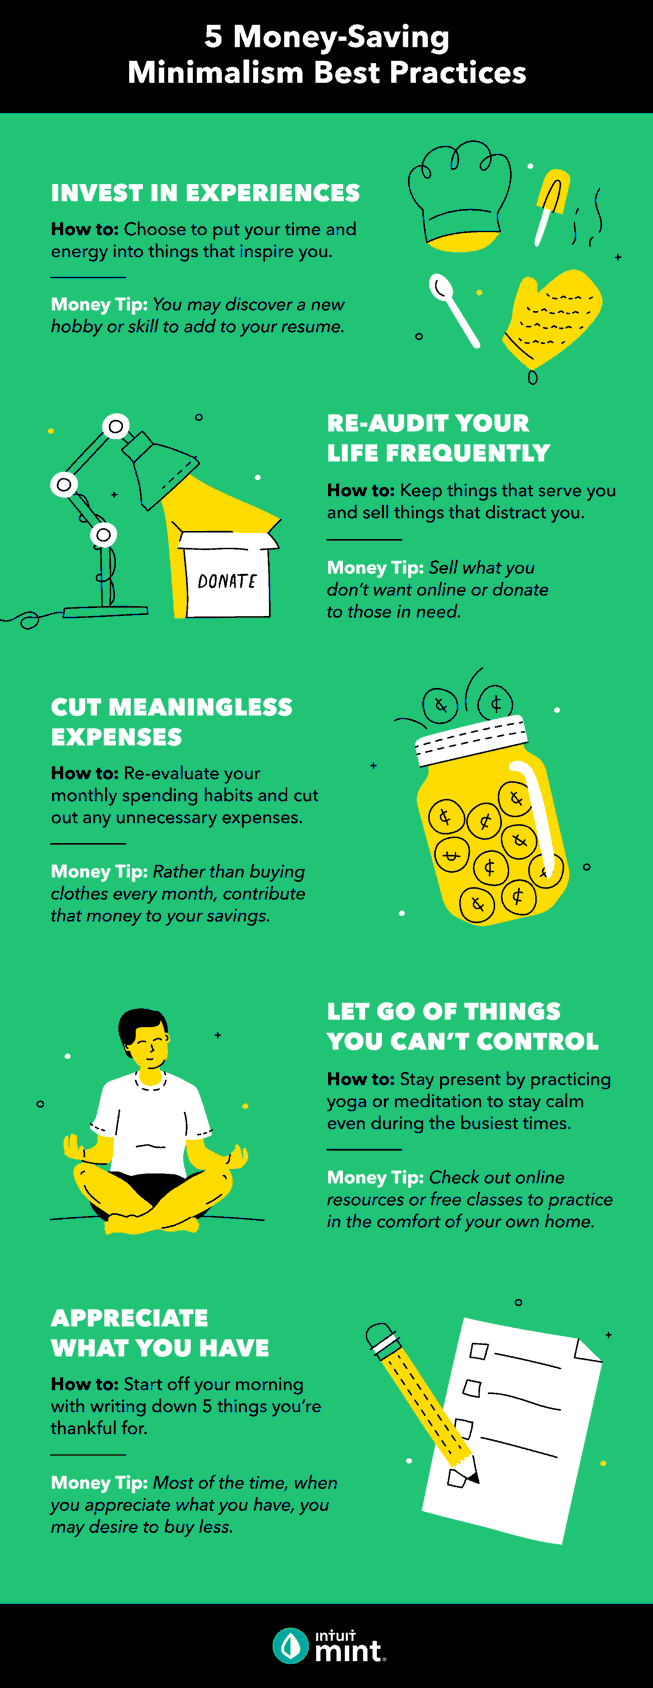 https://justbrightideas.com/wp-content/uploads/minimalist-living-infographic-money-saving.png